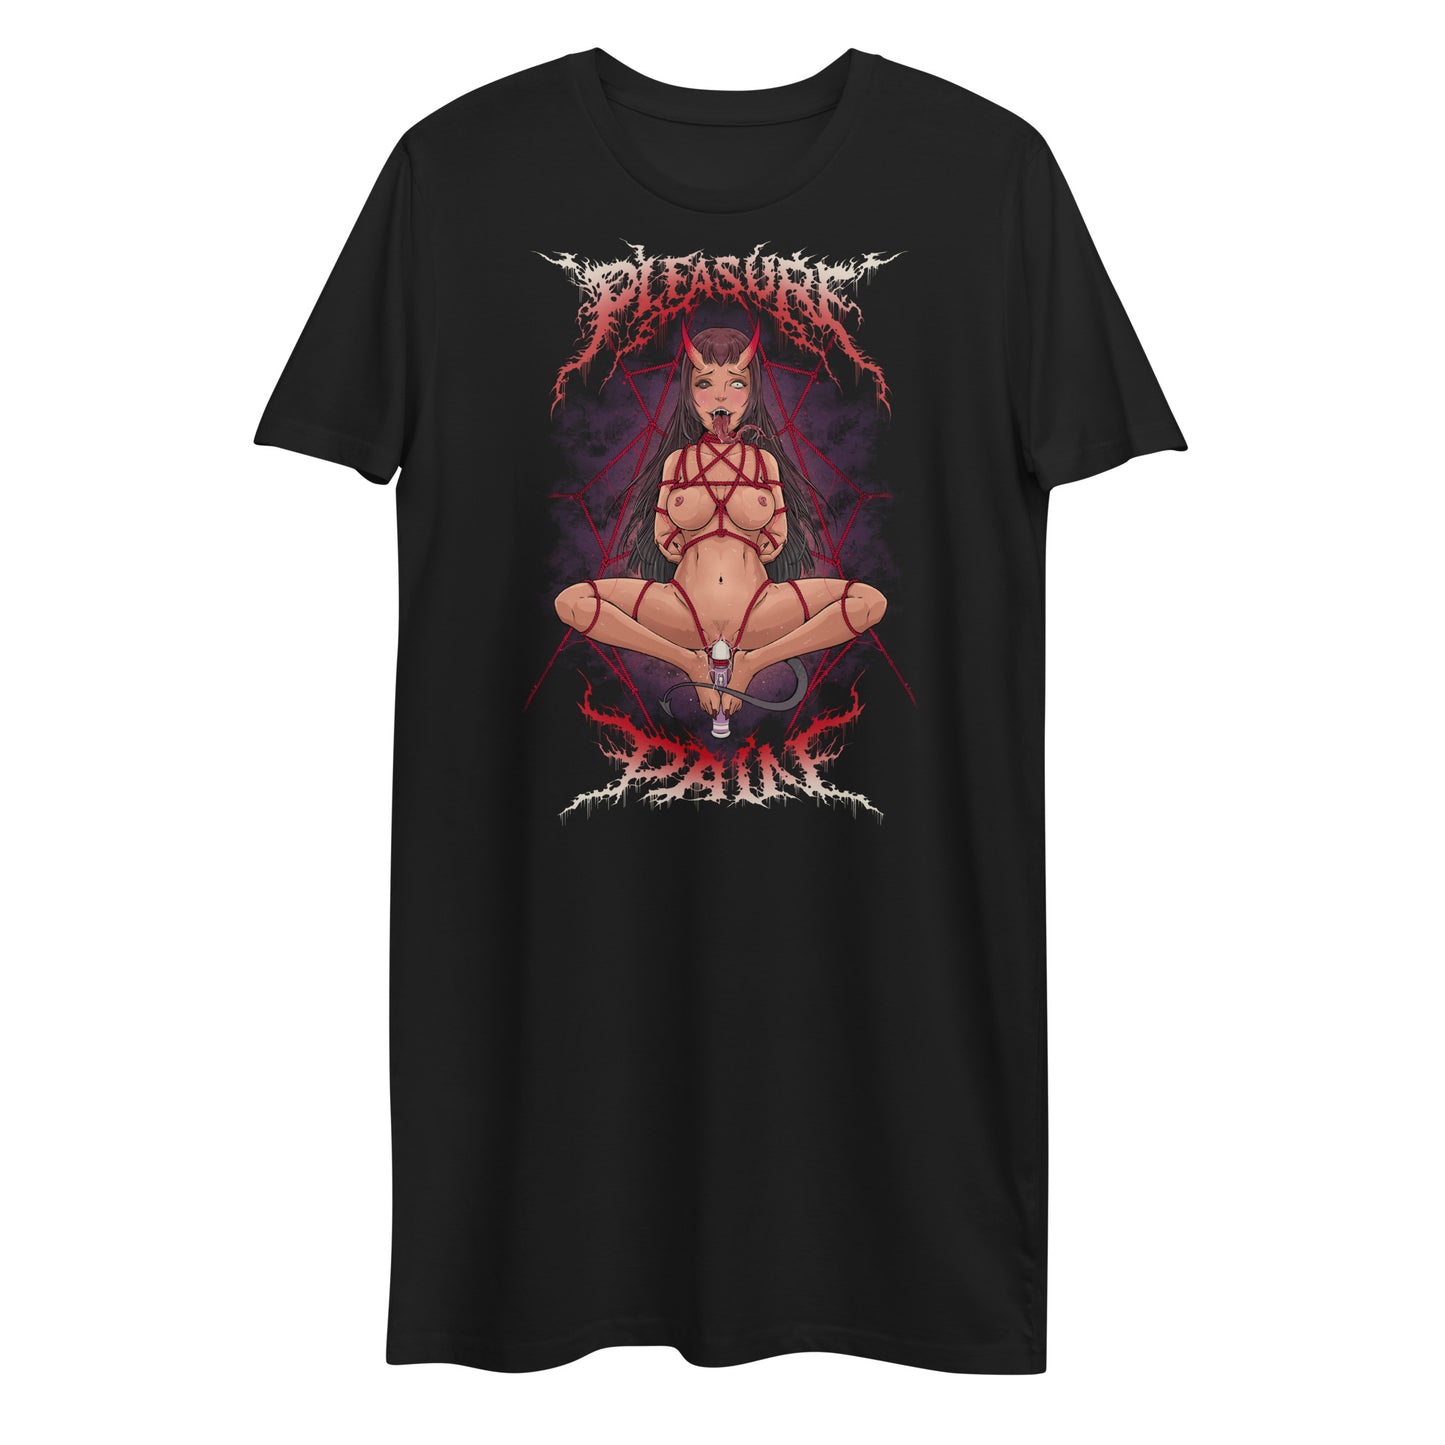 Devilish t-shirt dress